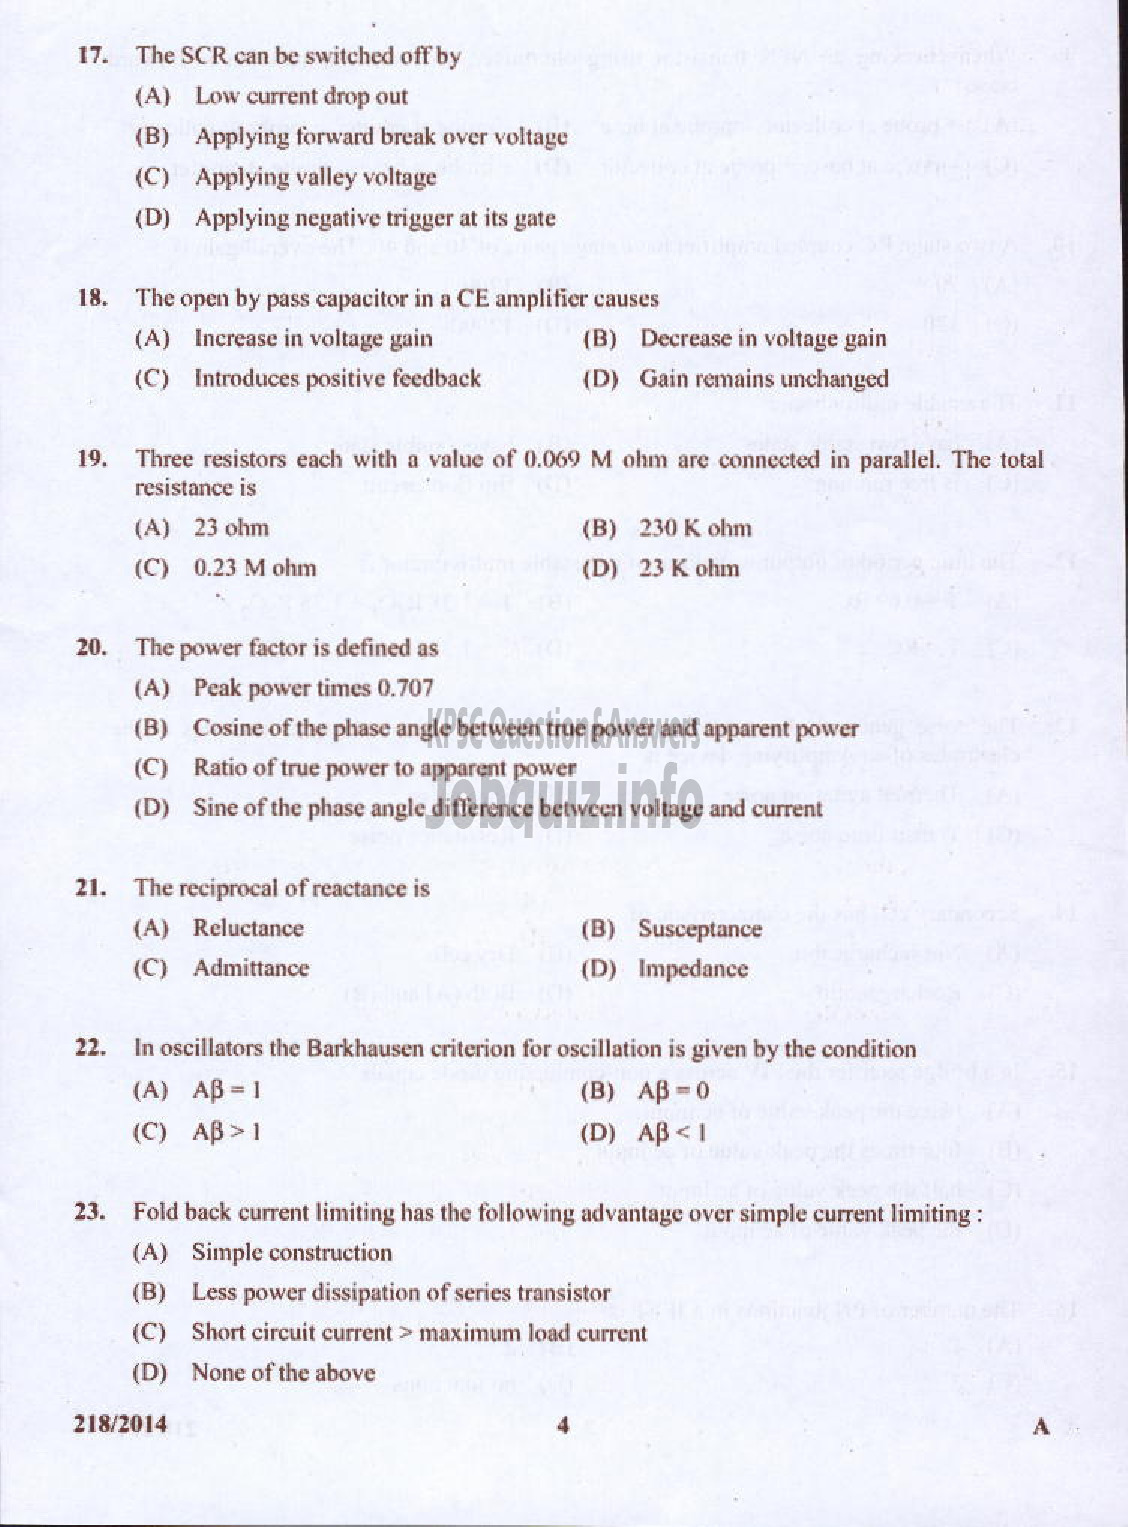 Kerala PSC Question Paper - LABORATORY TECHNICAL ASSISTANT MRRTV VHSE-4